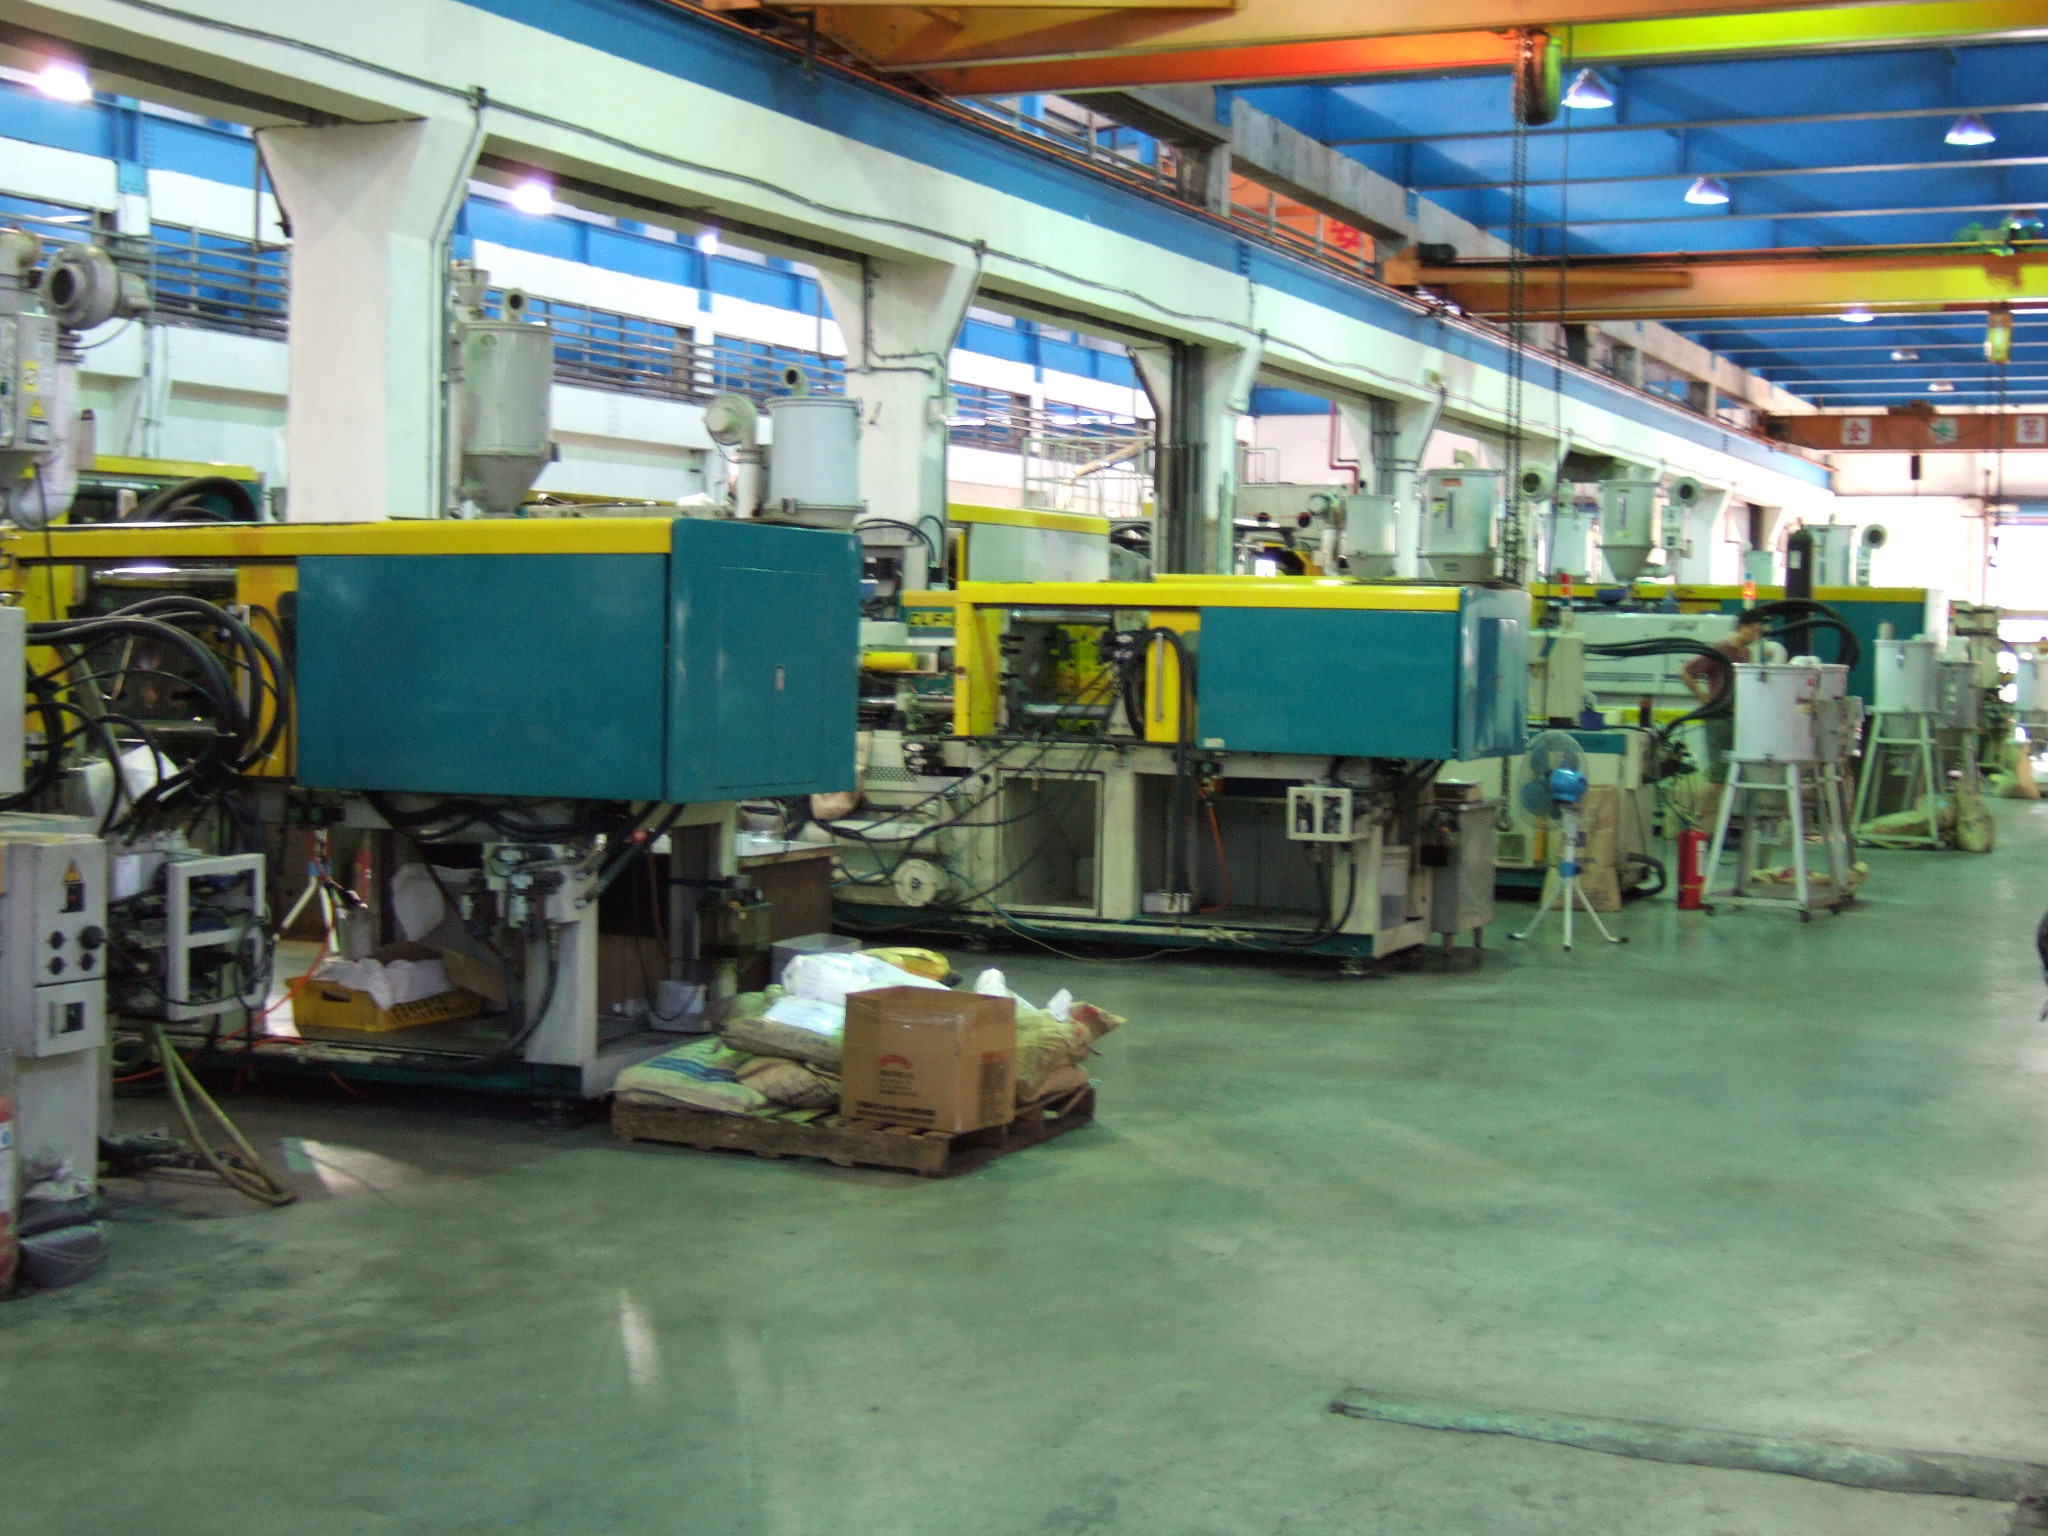 Inside Intertech’s factory: molding machines